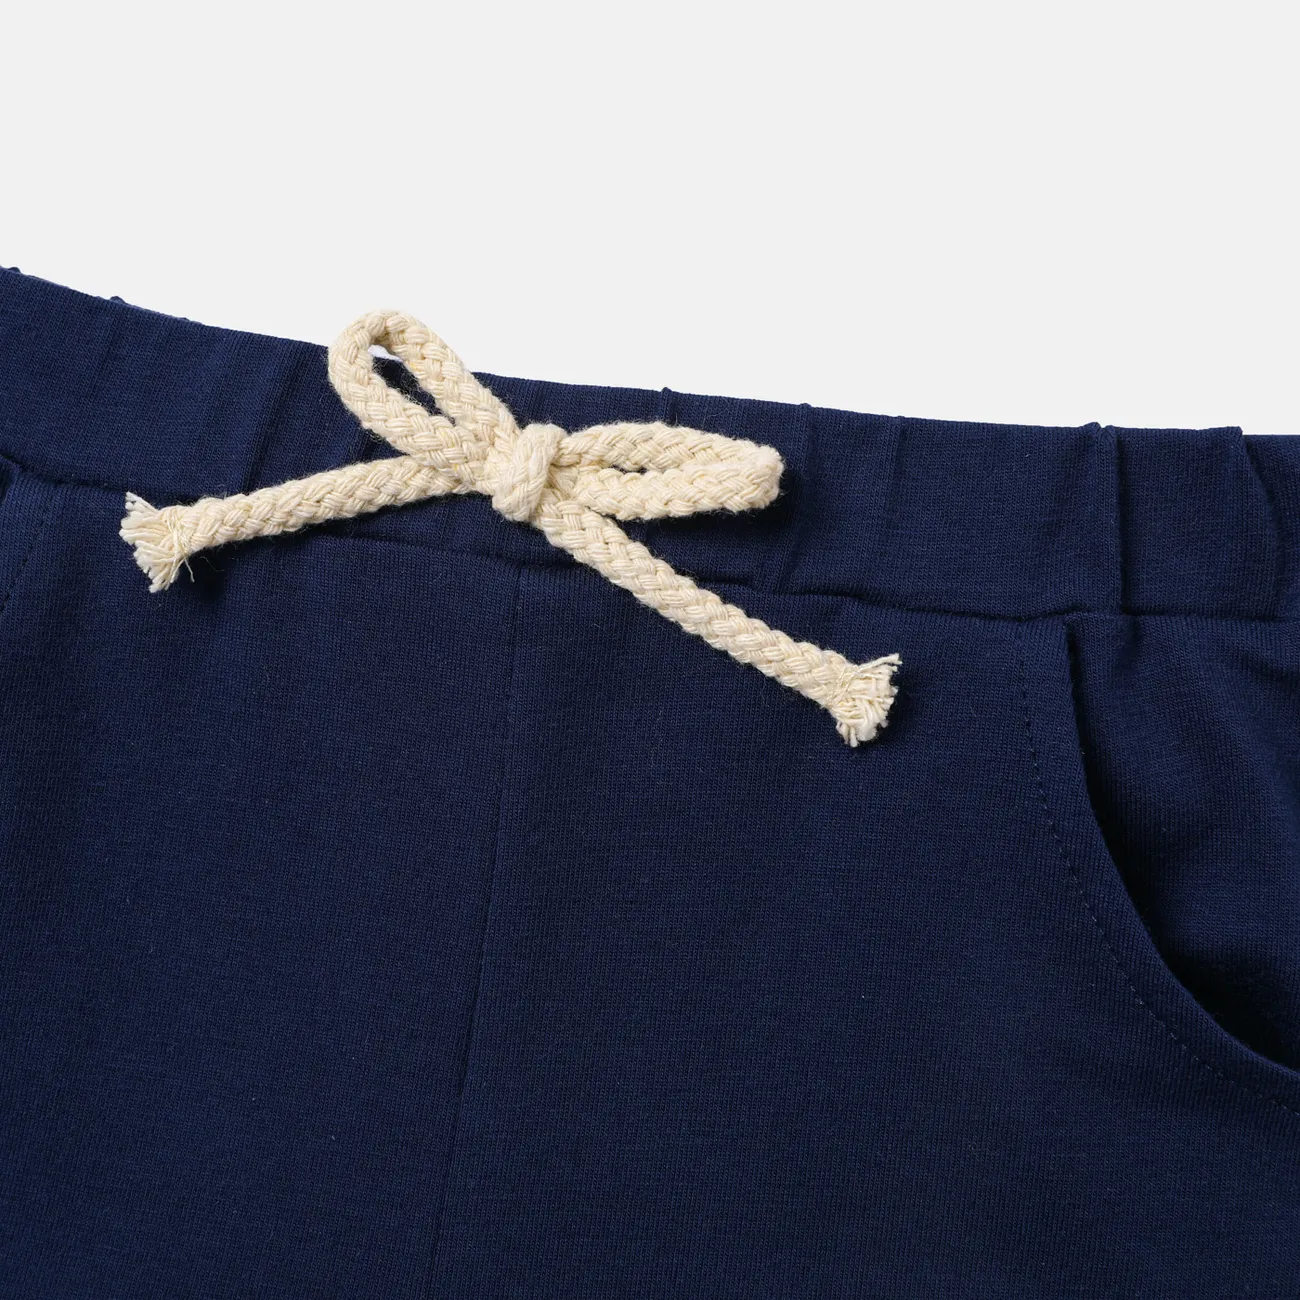 PAW Patrol Toddler Girl/Boy 2pcs Colorblock Short-sleeve Naia Tee and Cotton Shorts Set Blue big image 1